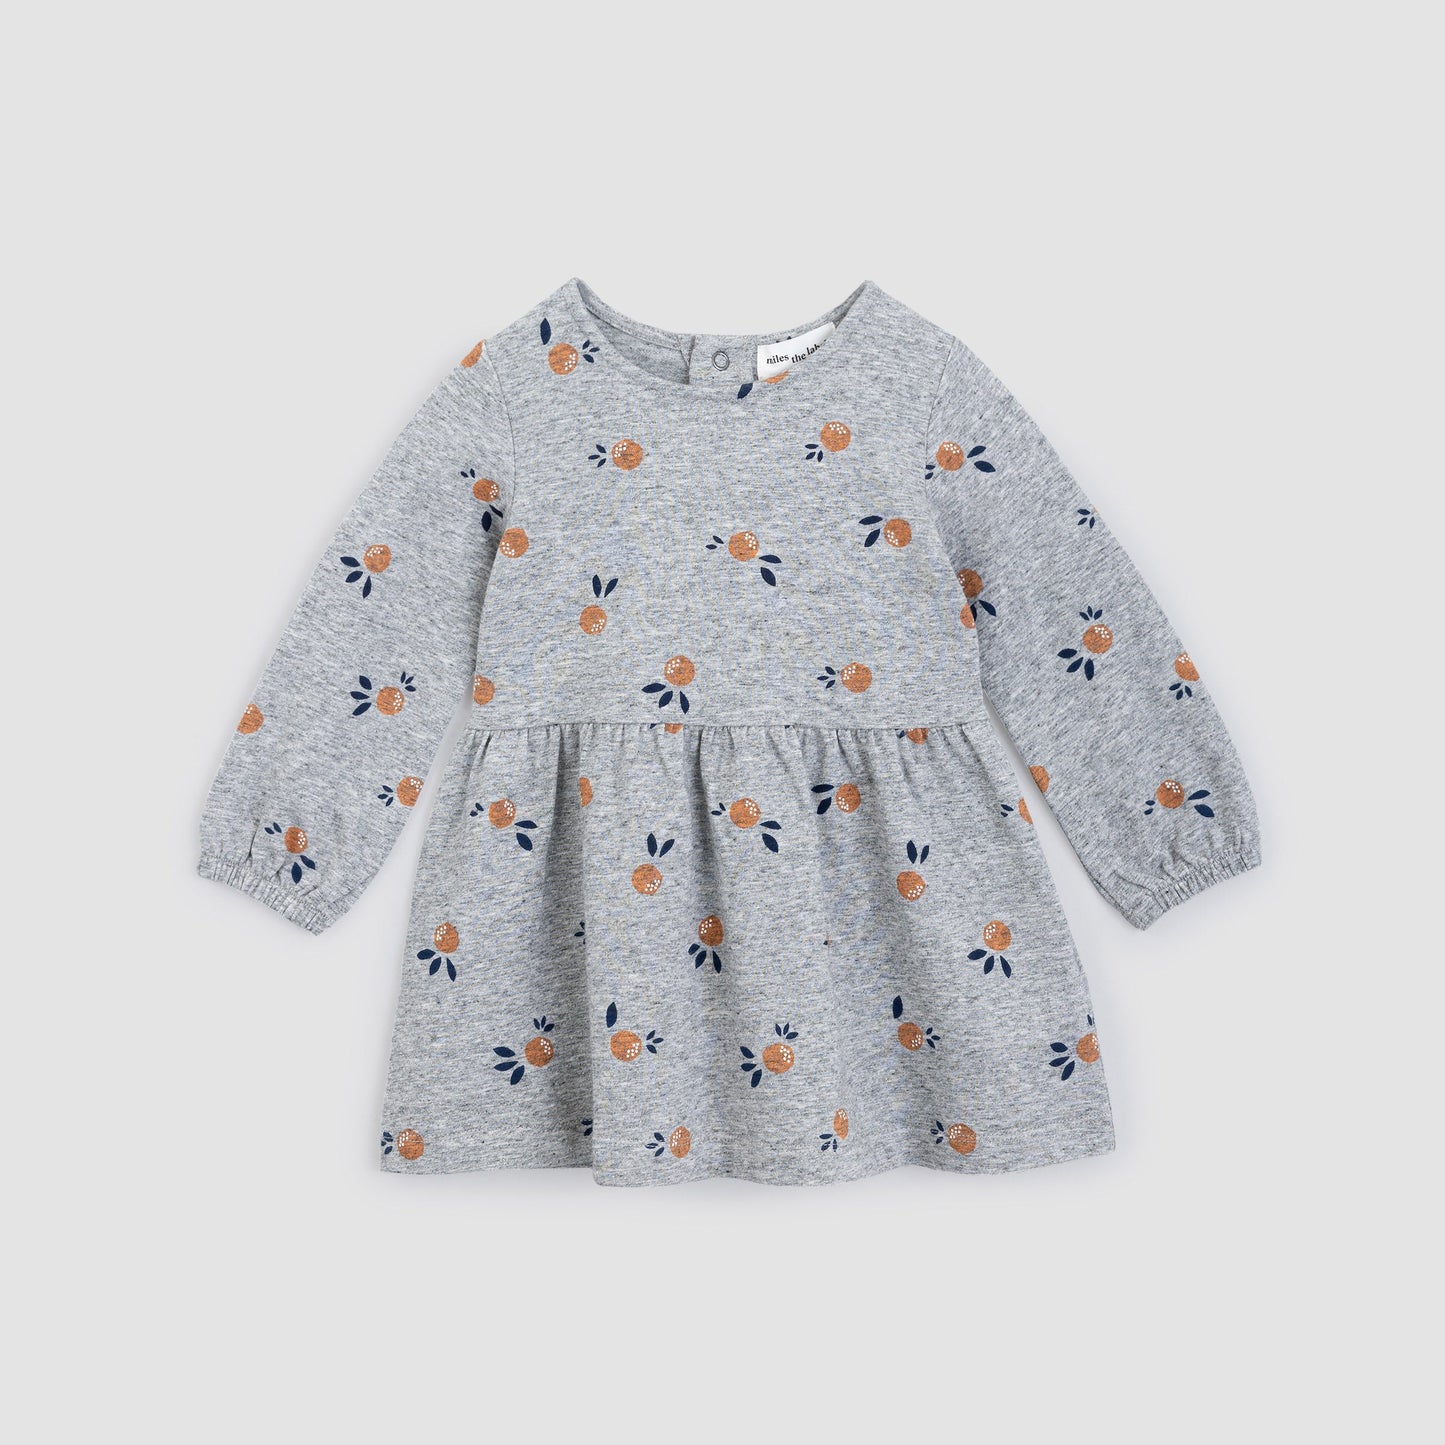 Miles the Label infant girl oranges print dress